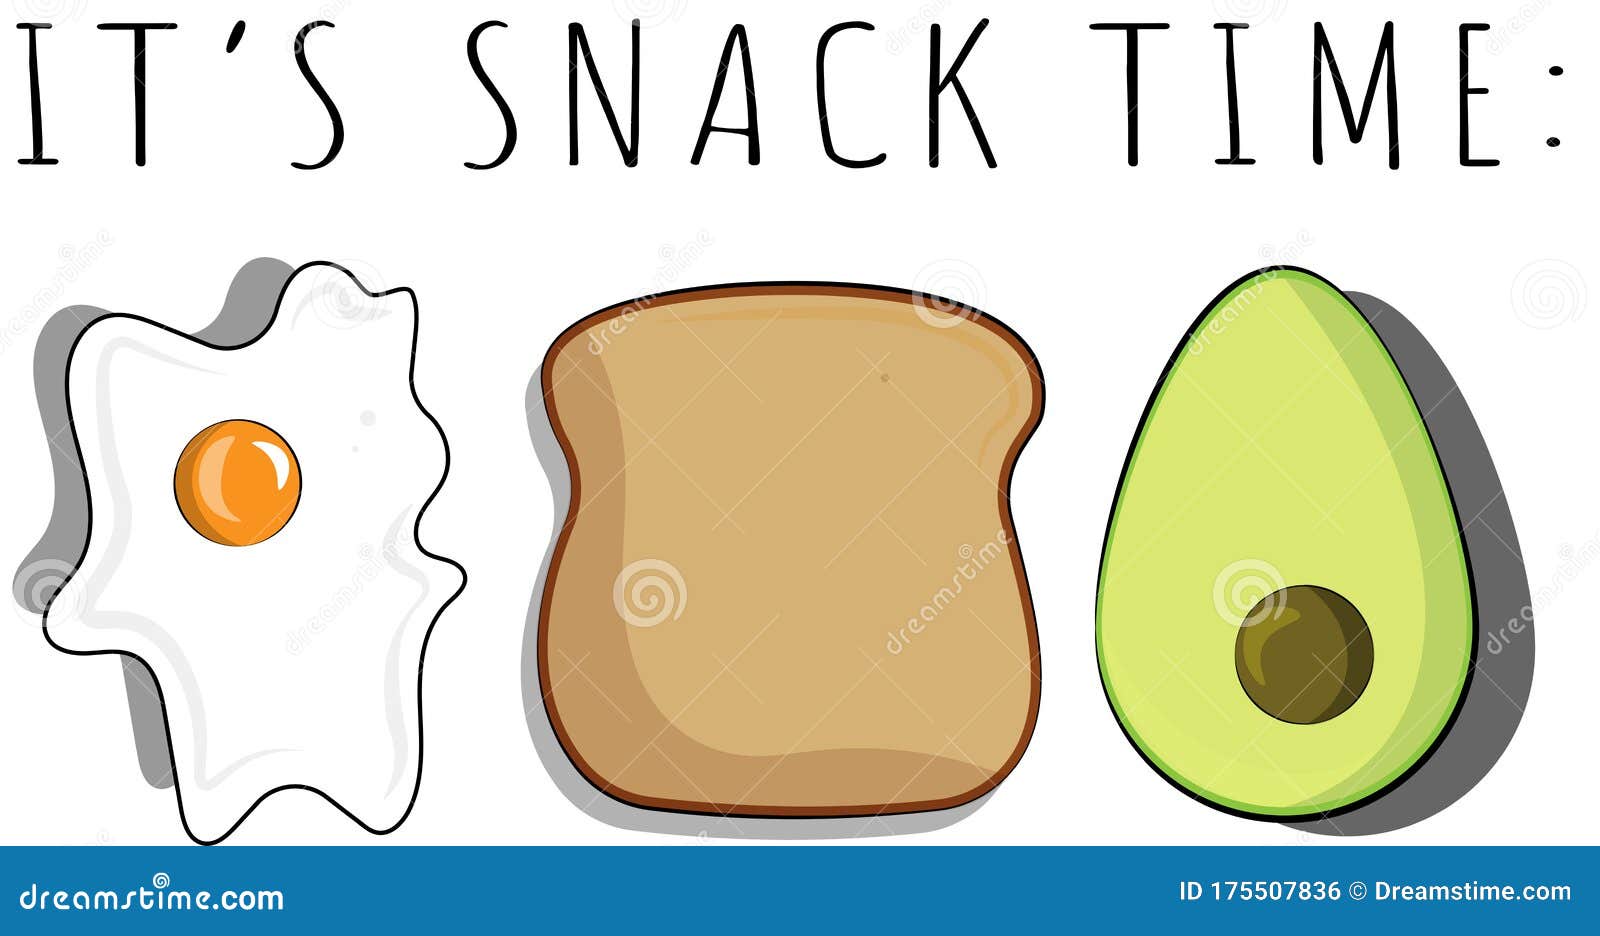 It`s snack time! stock illustration. Illustration of bread - 175507836